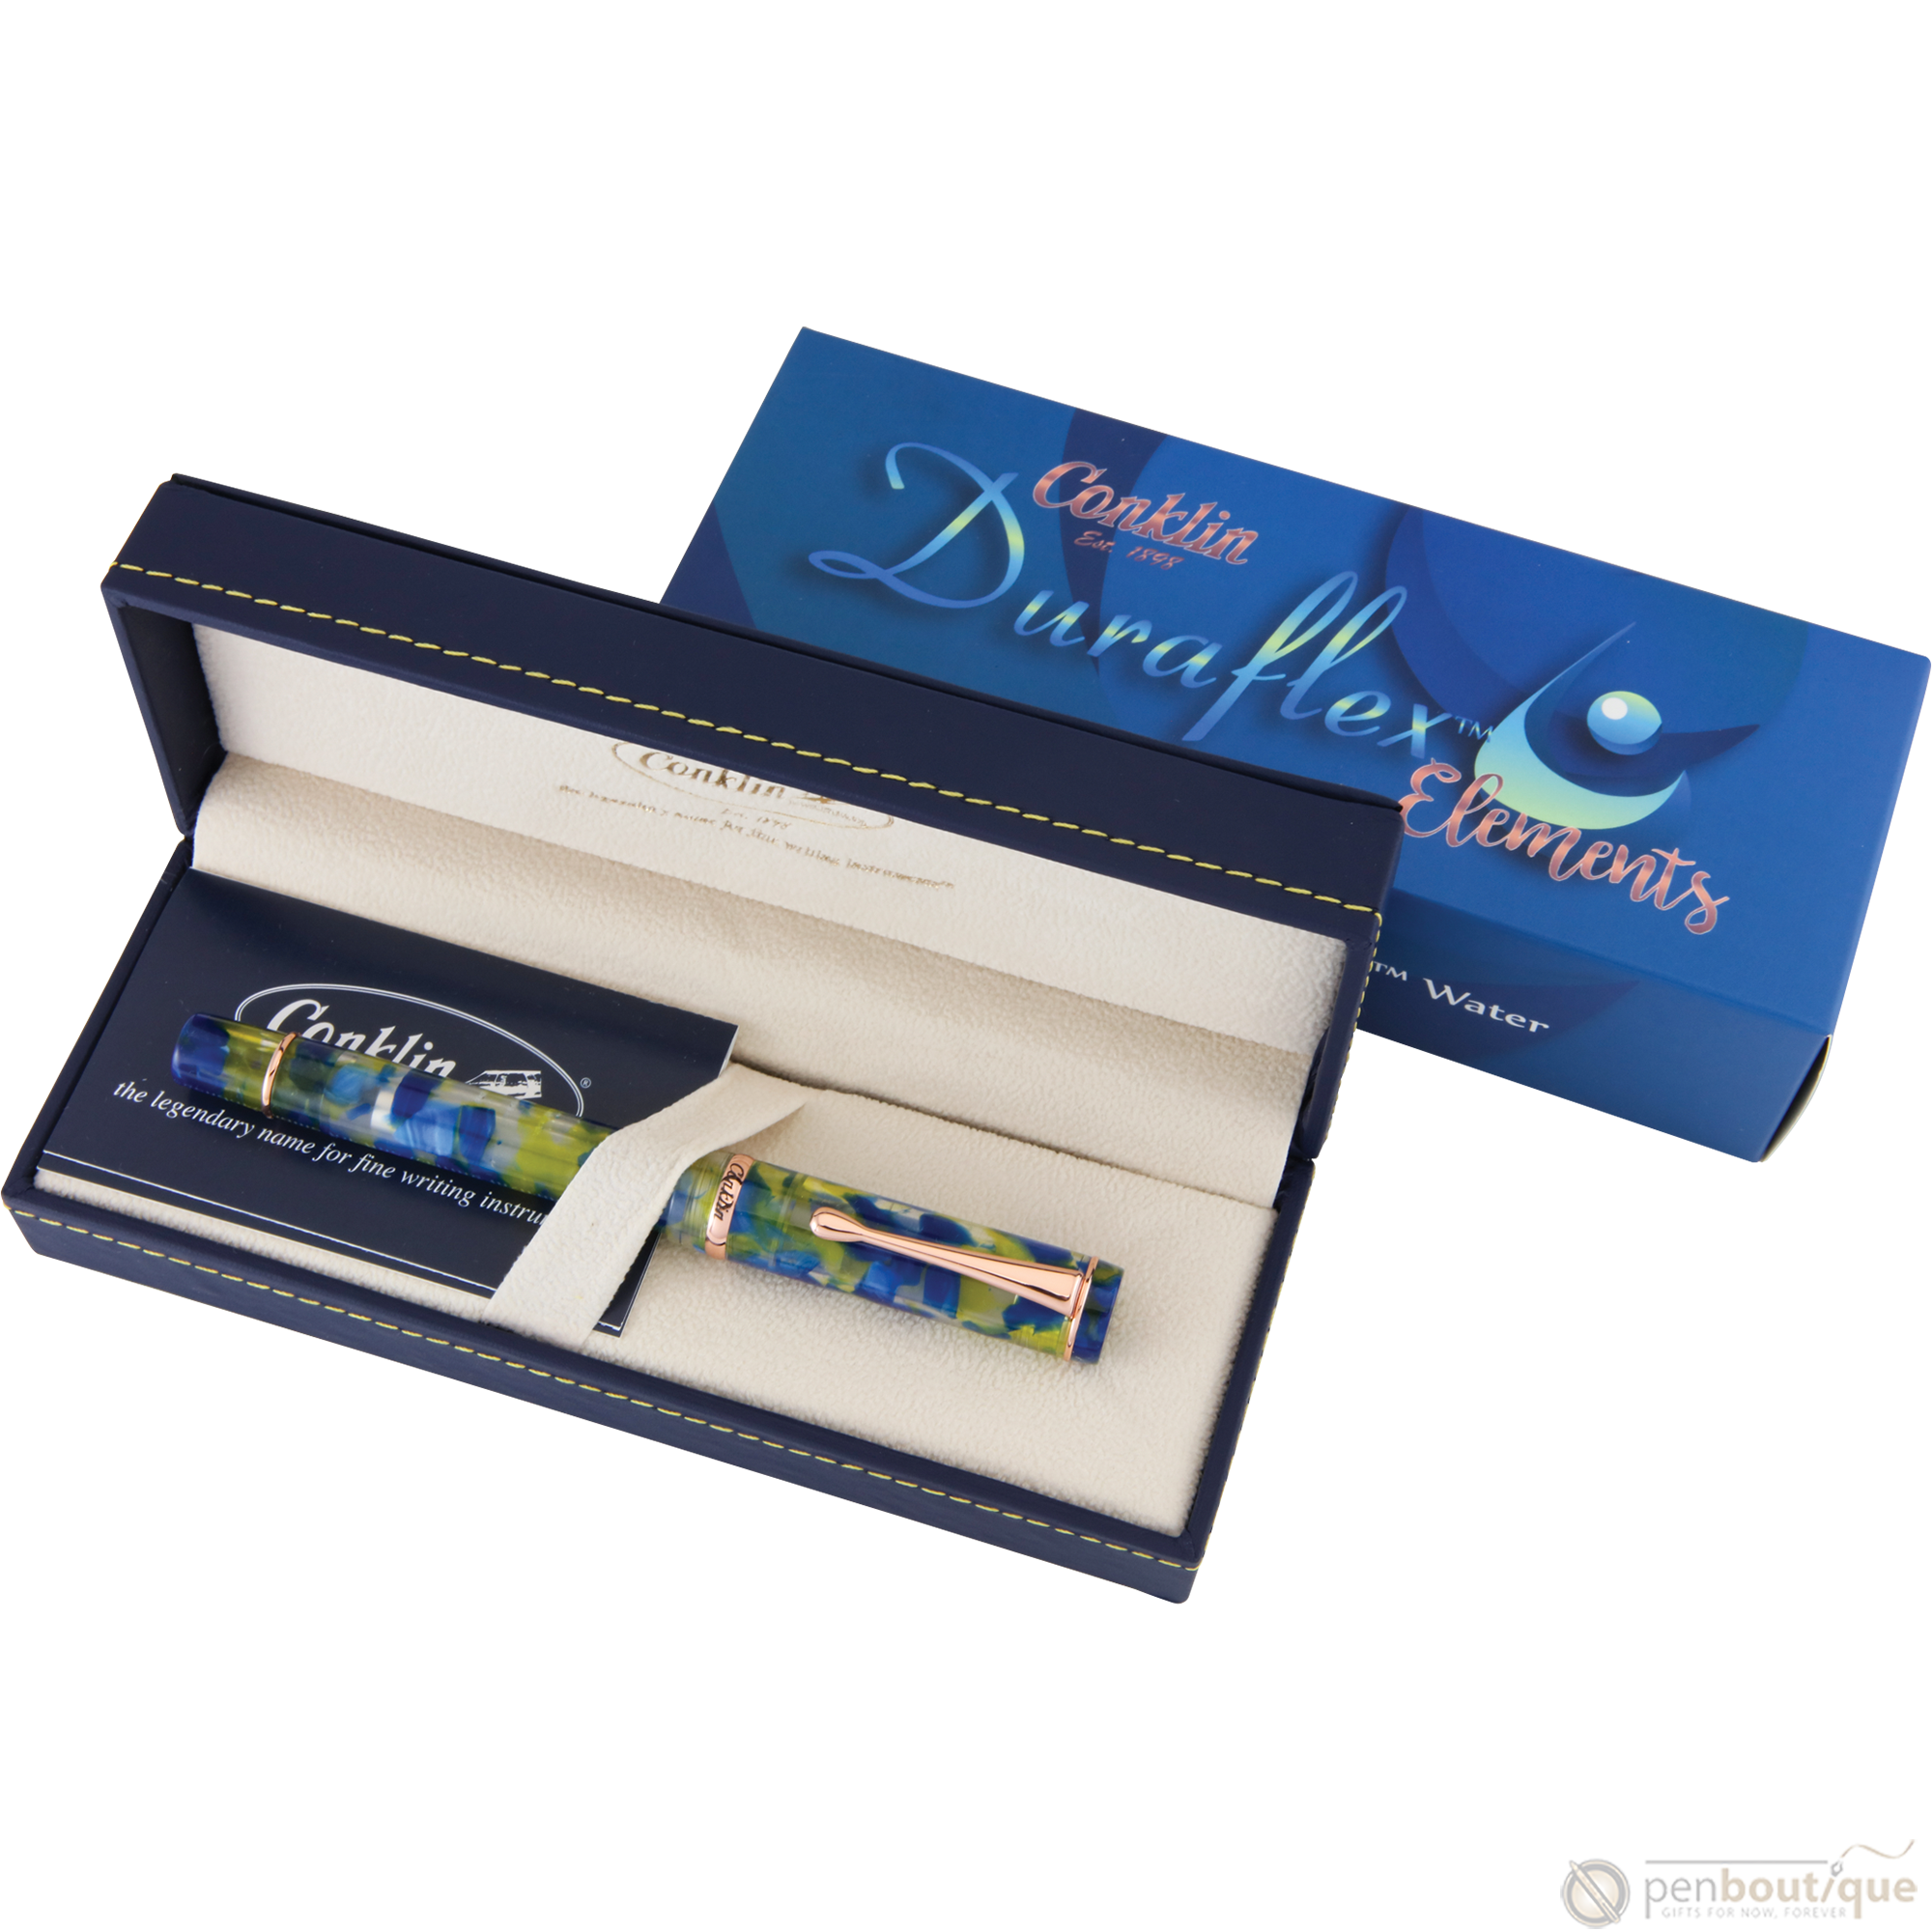 Conklin Duraflex Elements Fountain Pen - Water (Limited Edition)-Pen Boutique Ltd